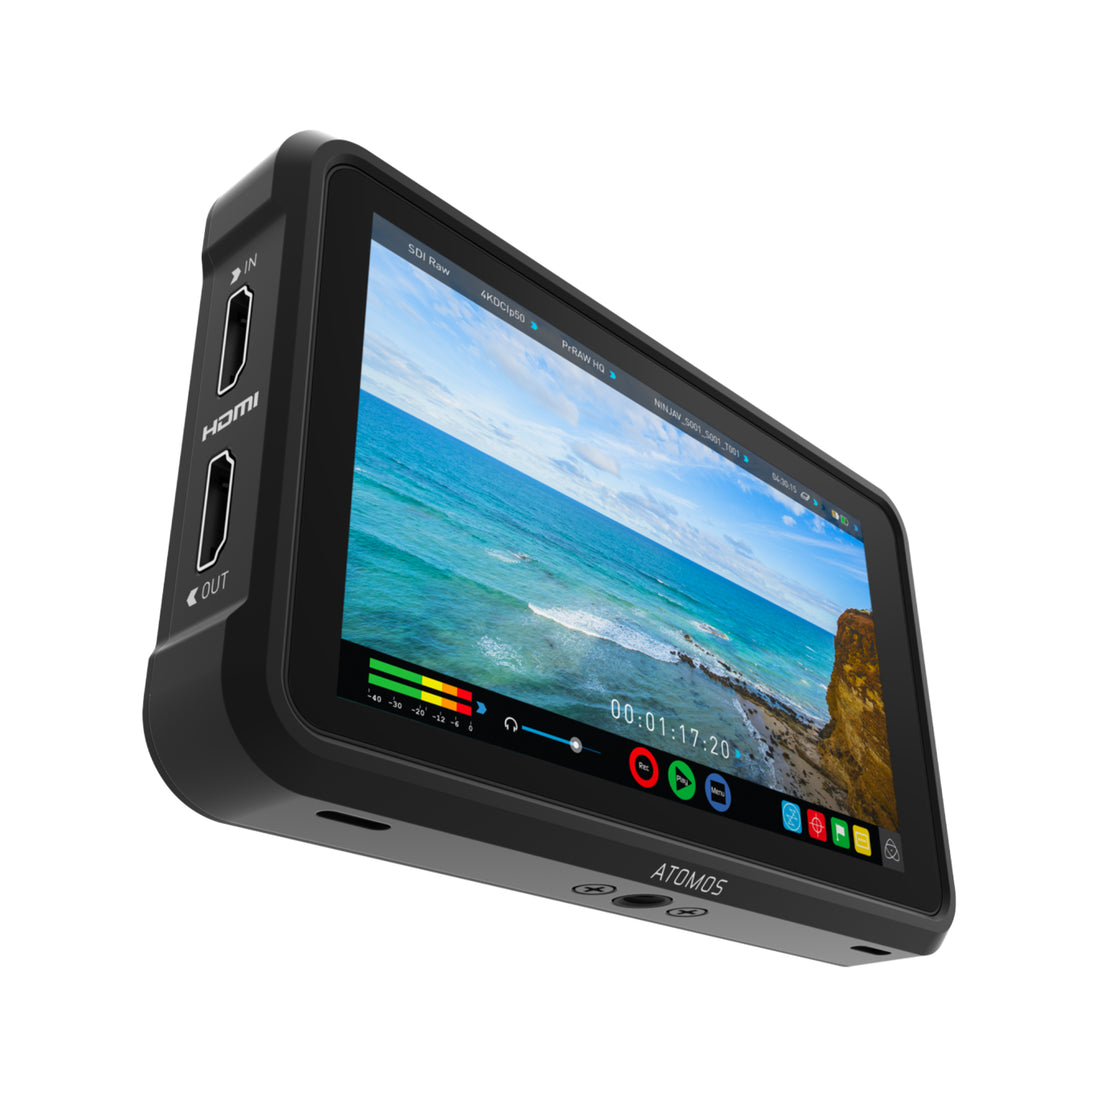 Atomos Ninja V 4Kp60 10bit HDR Daylight Viewable 1000nit Portable Monitor/Recorder